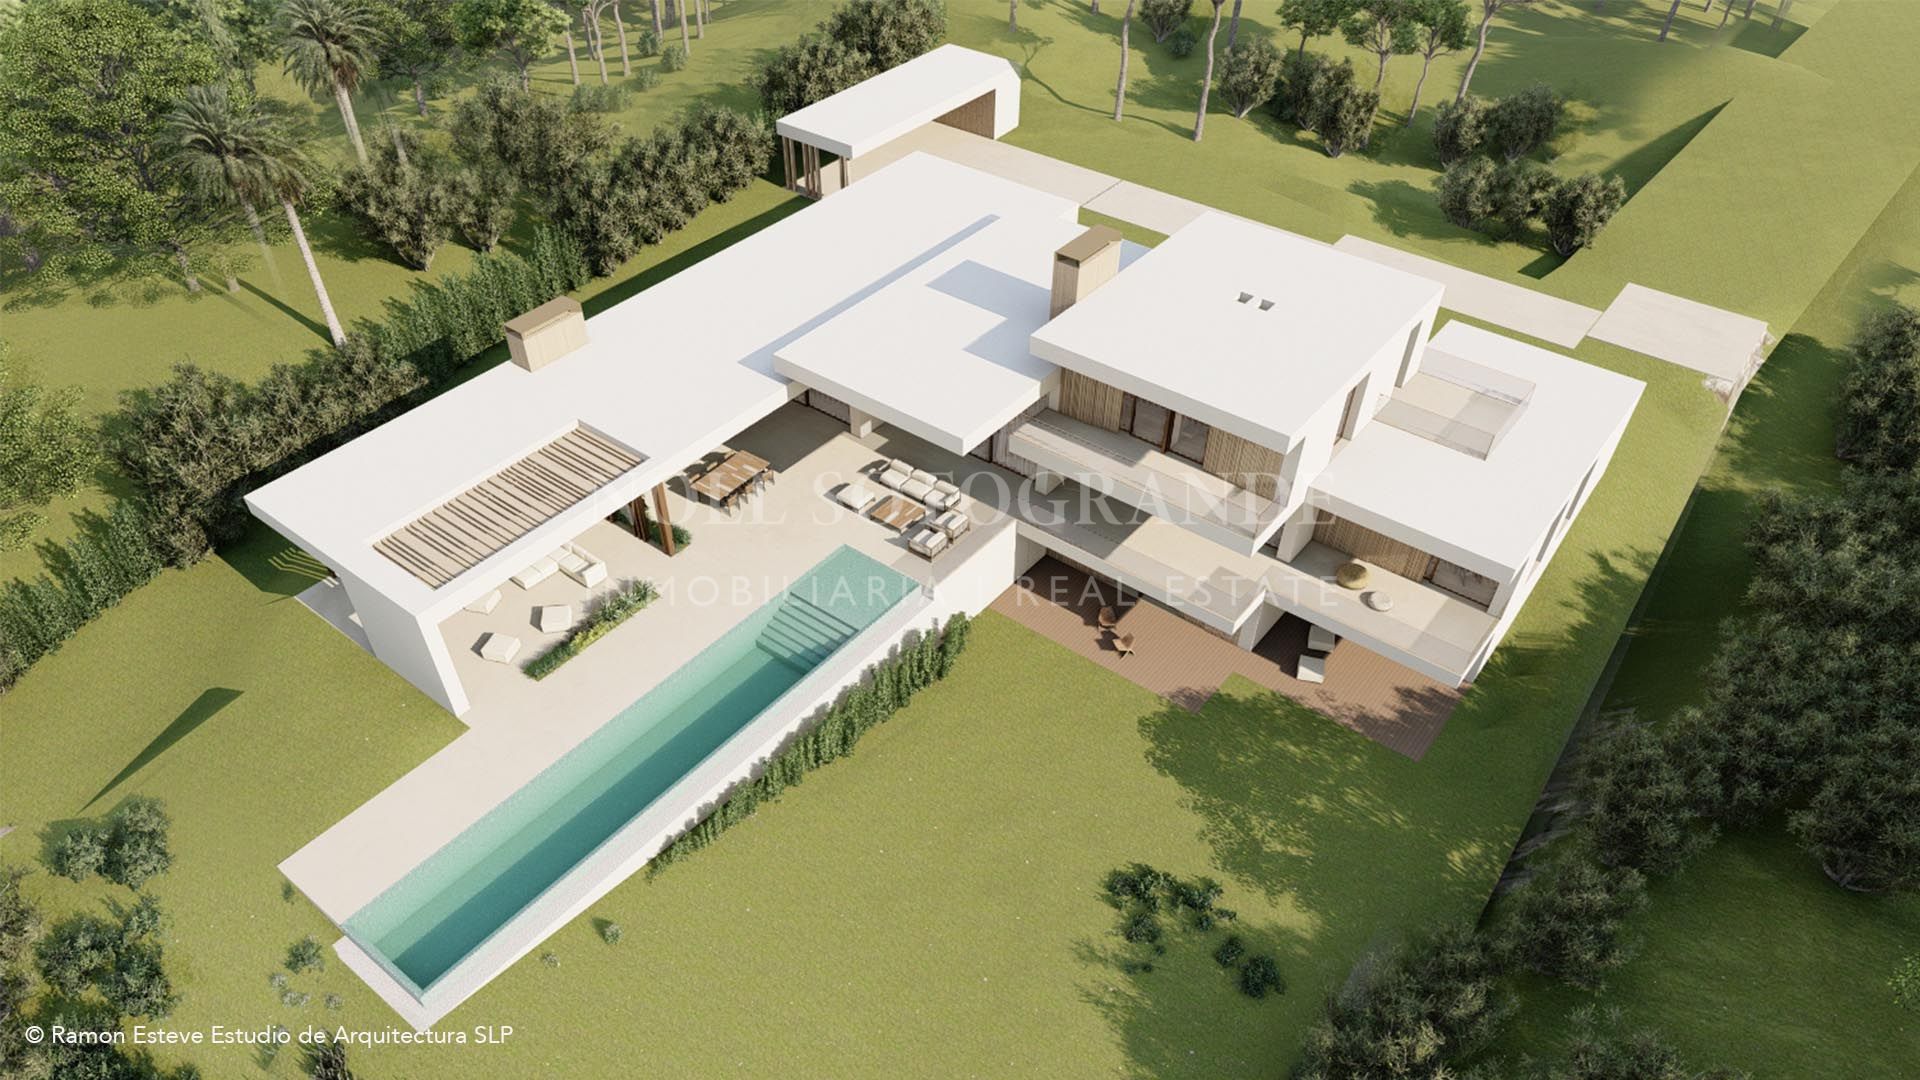 Building plot for sale incl. planning permission for a villa designed by Architect Ramon Esteve